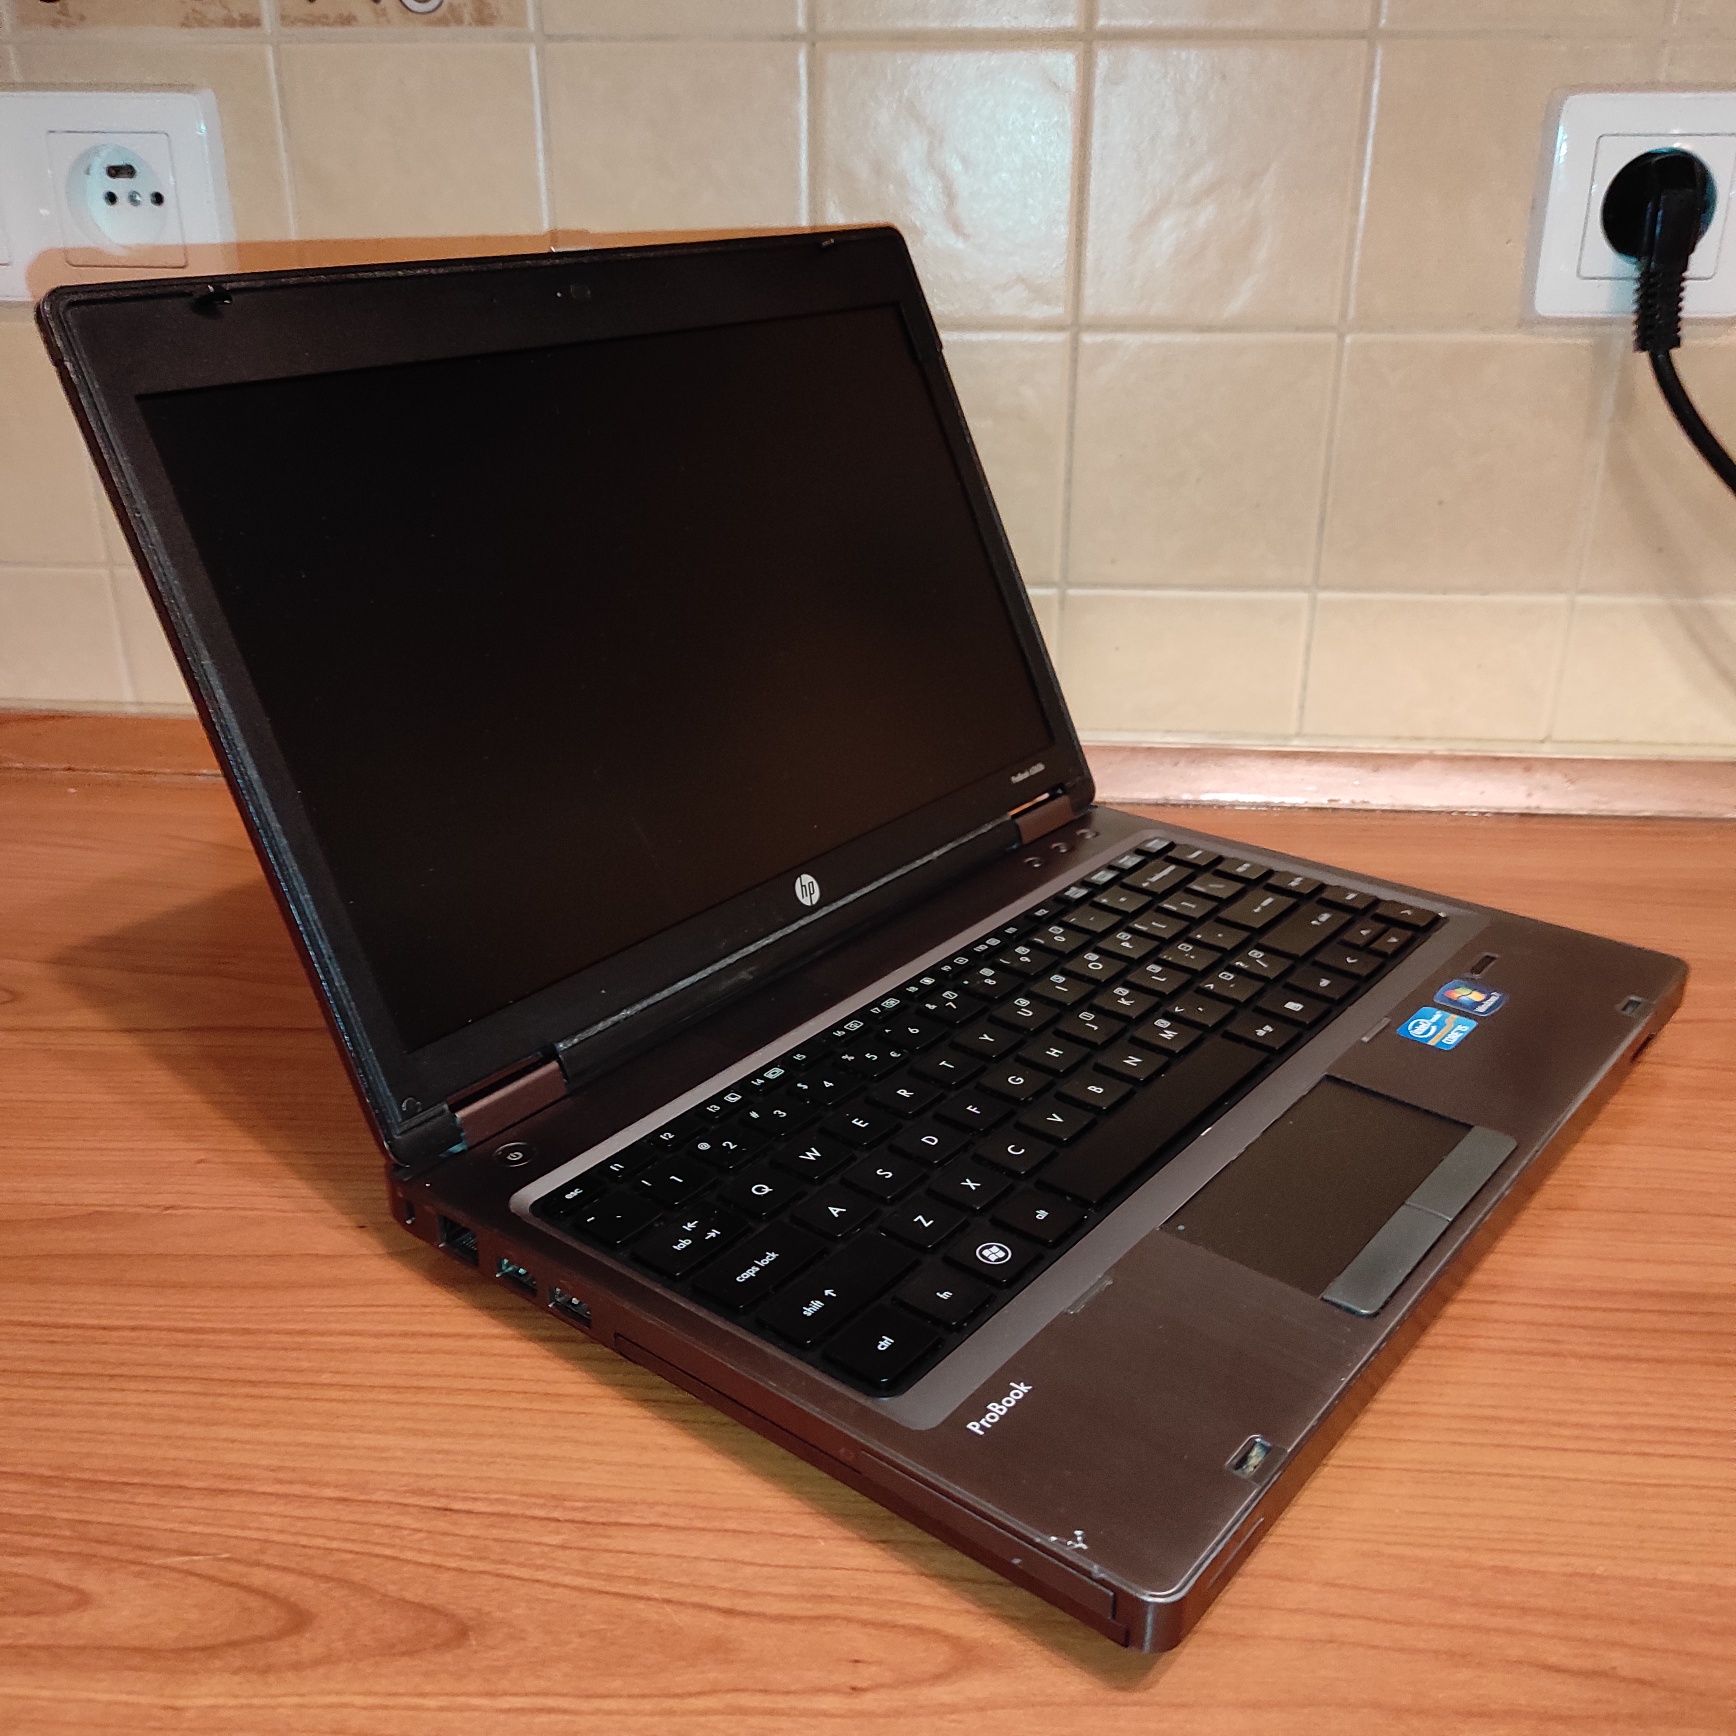 Laptop HP 6360b probook i5